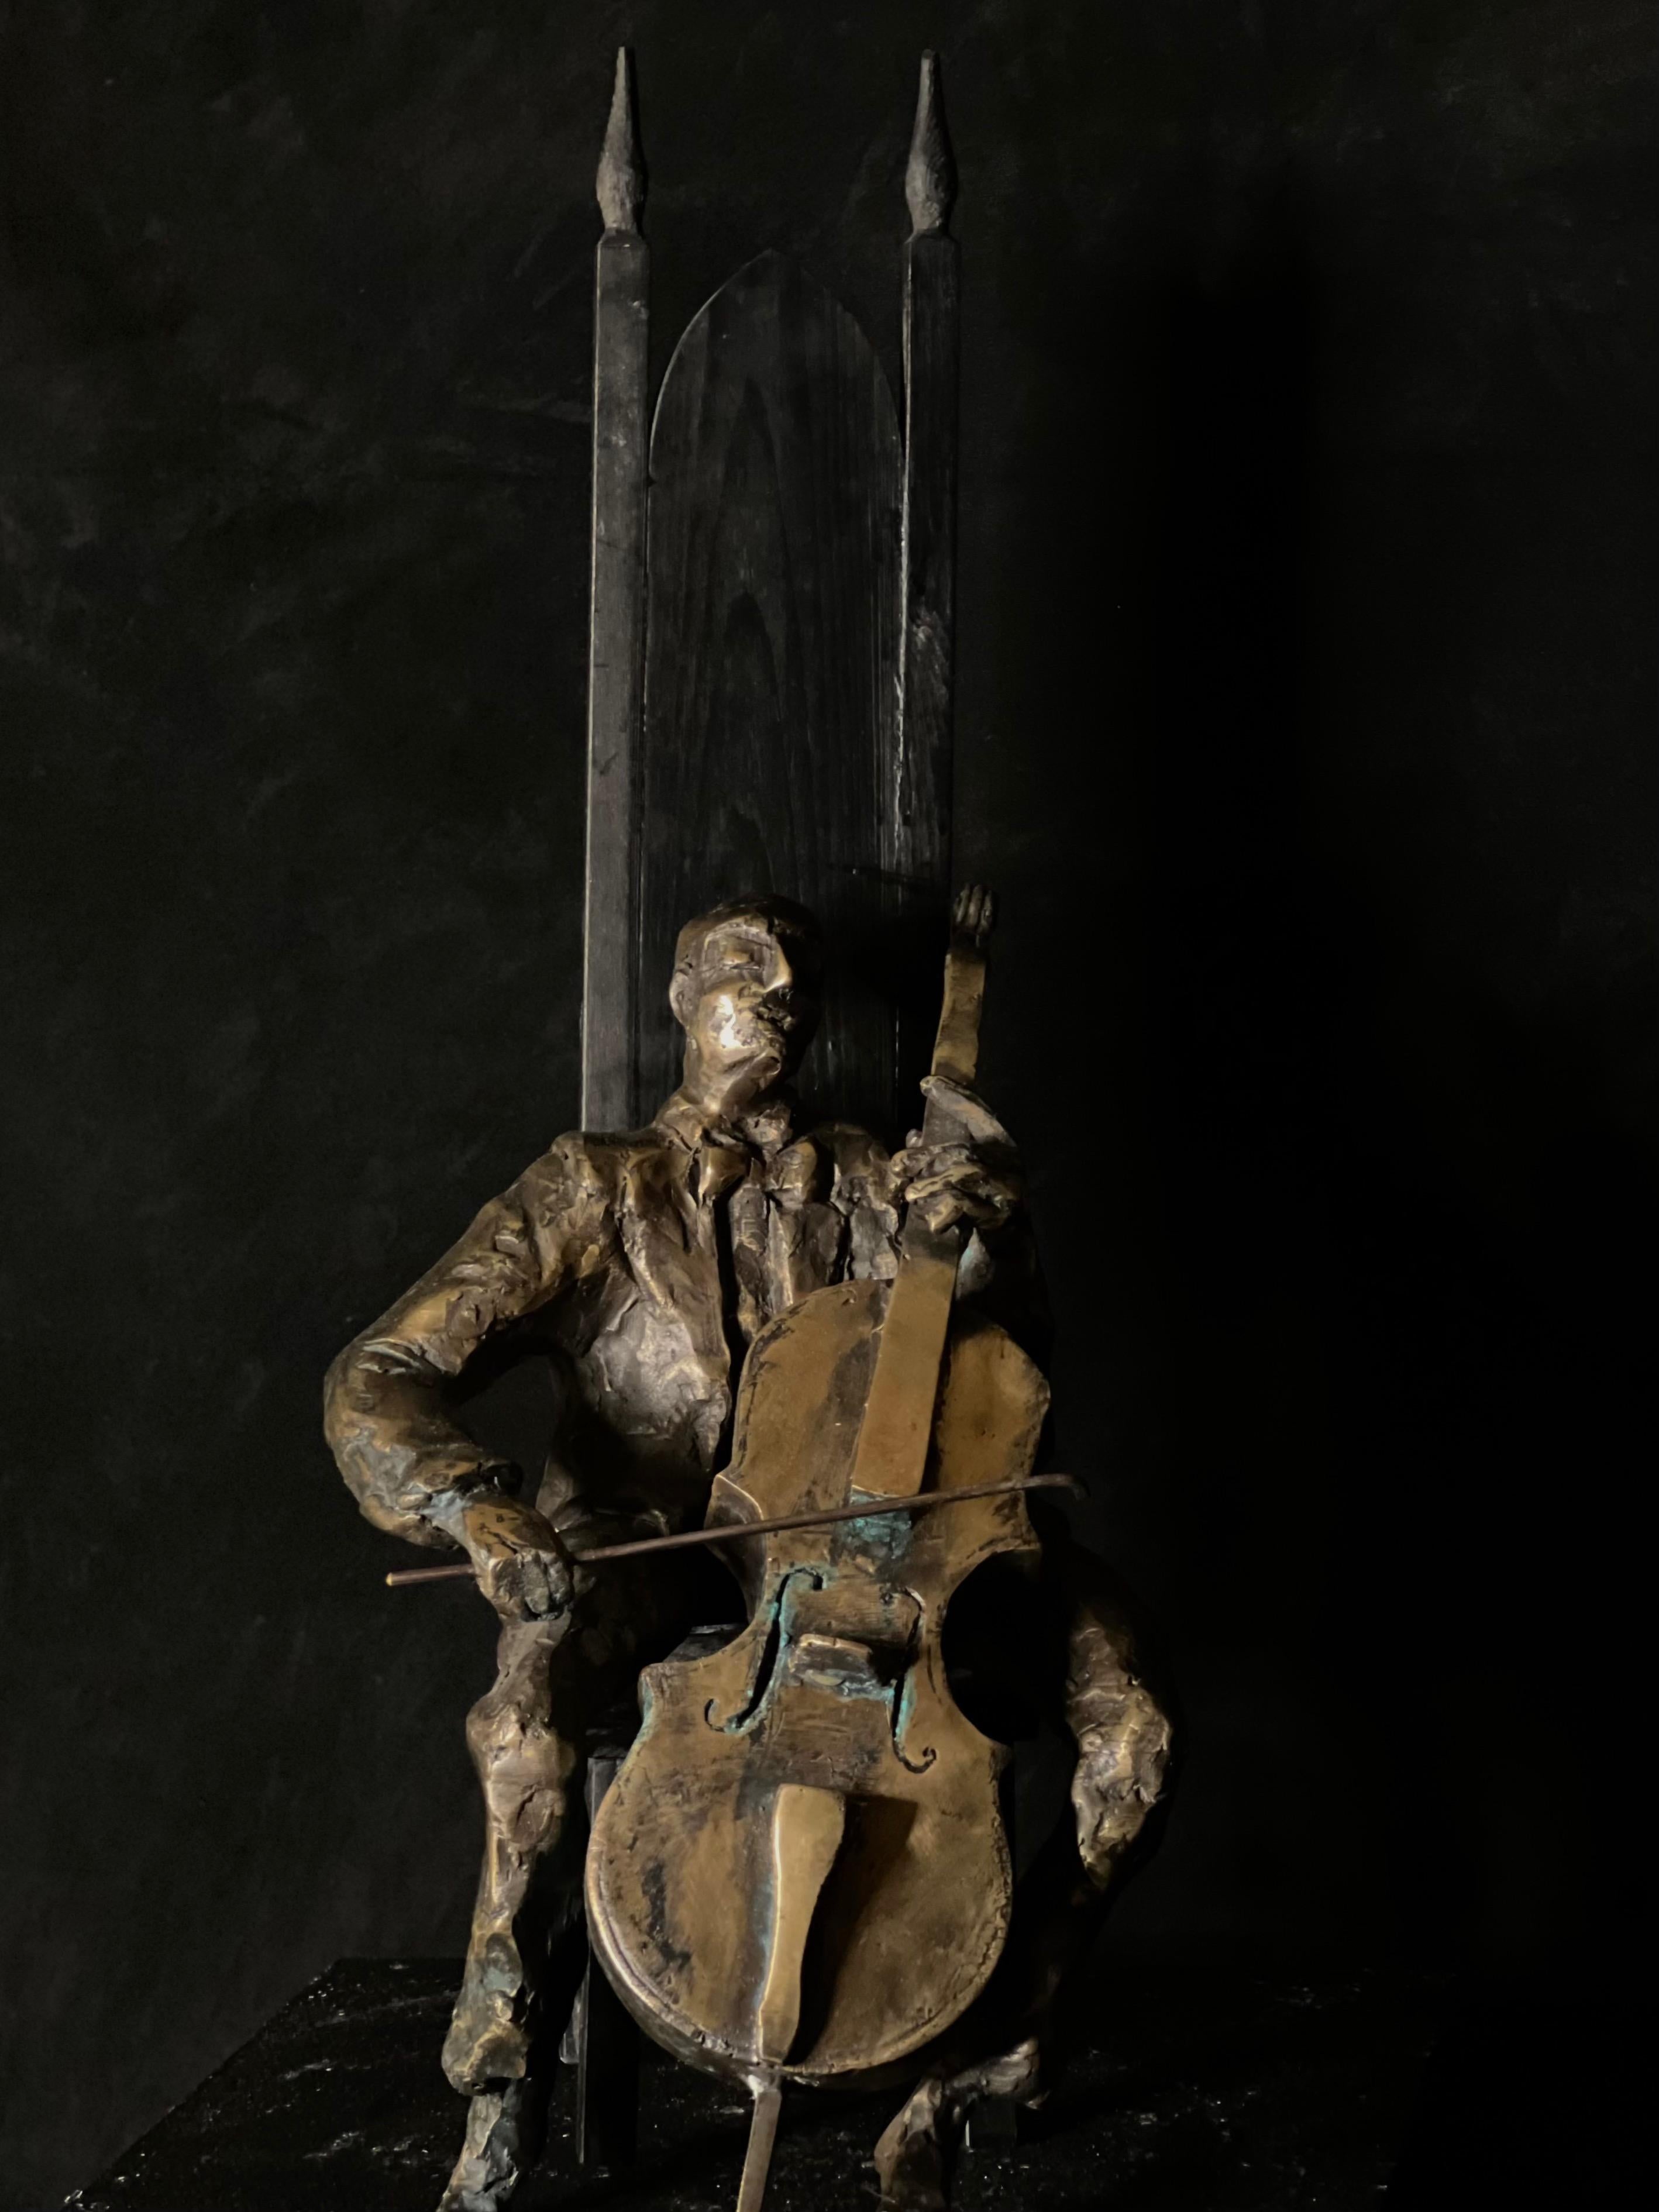 Tauno Kangro Figurative Sculpture - The Cello player  - bronze sculpture